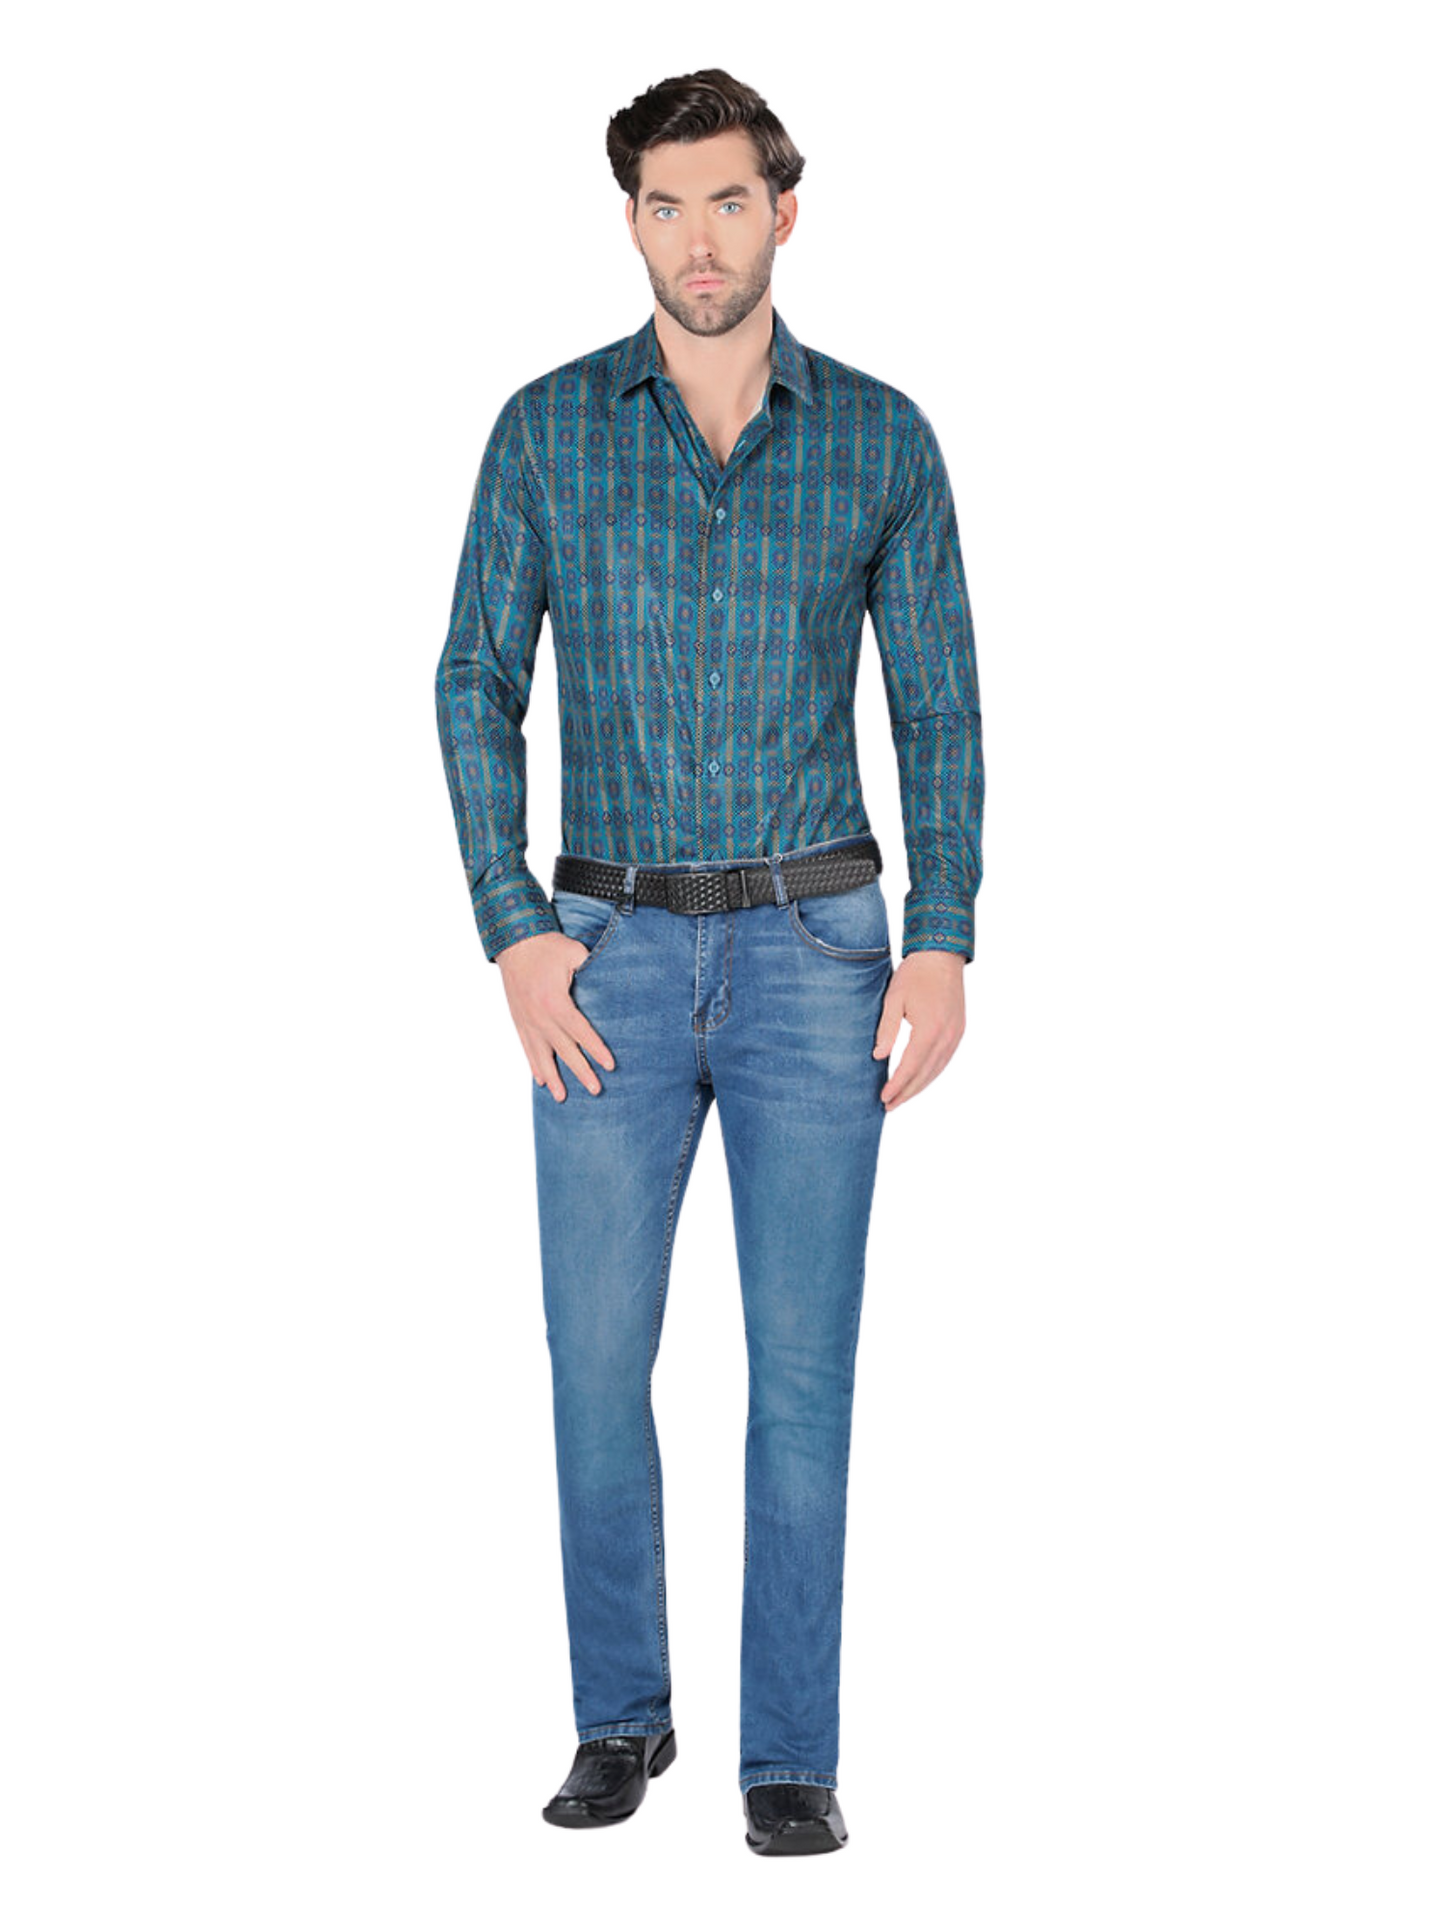 Stretch Denim Jeans for Men 'Montero' - ID: 5310 Denim Jeans Montero Blue